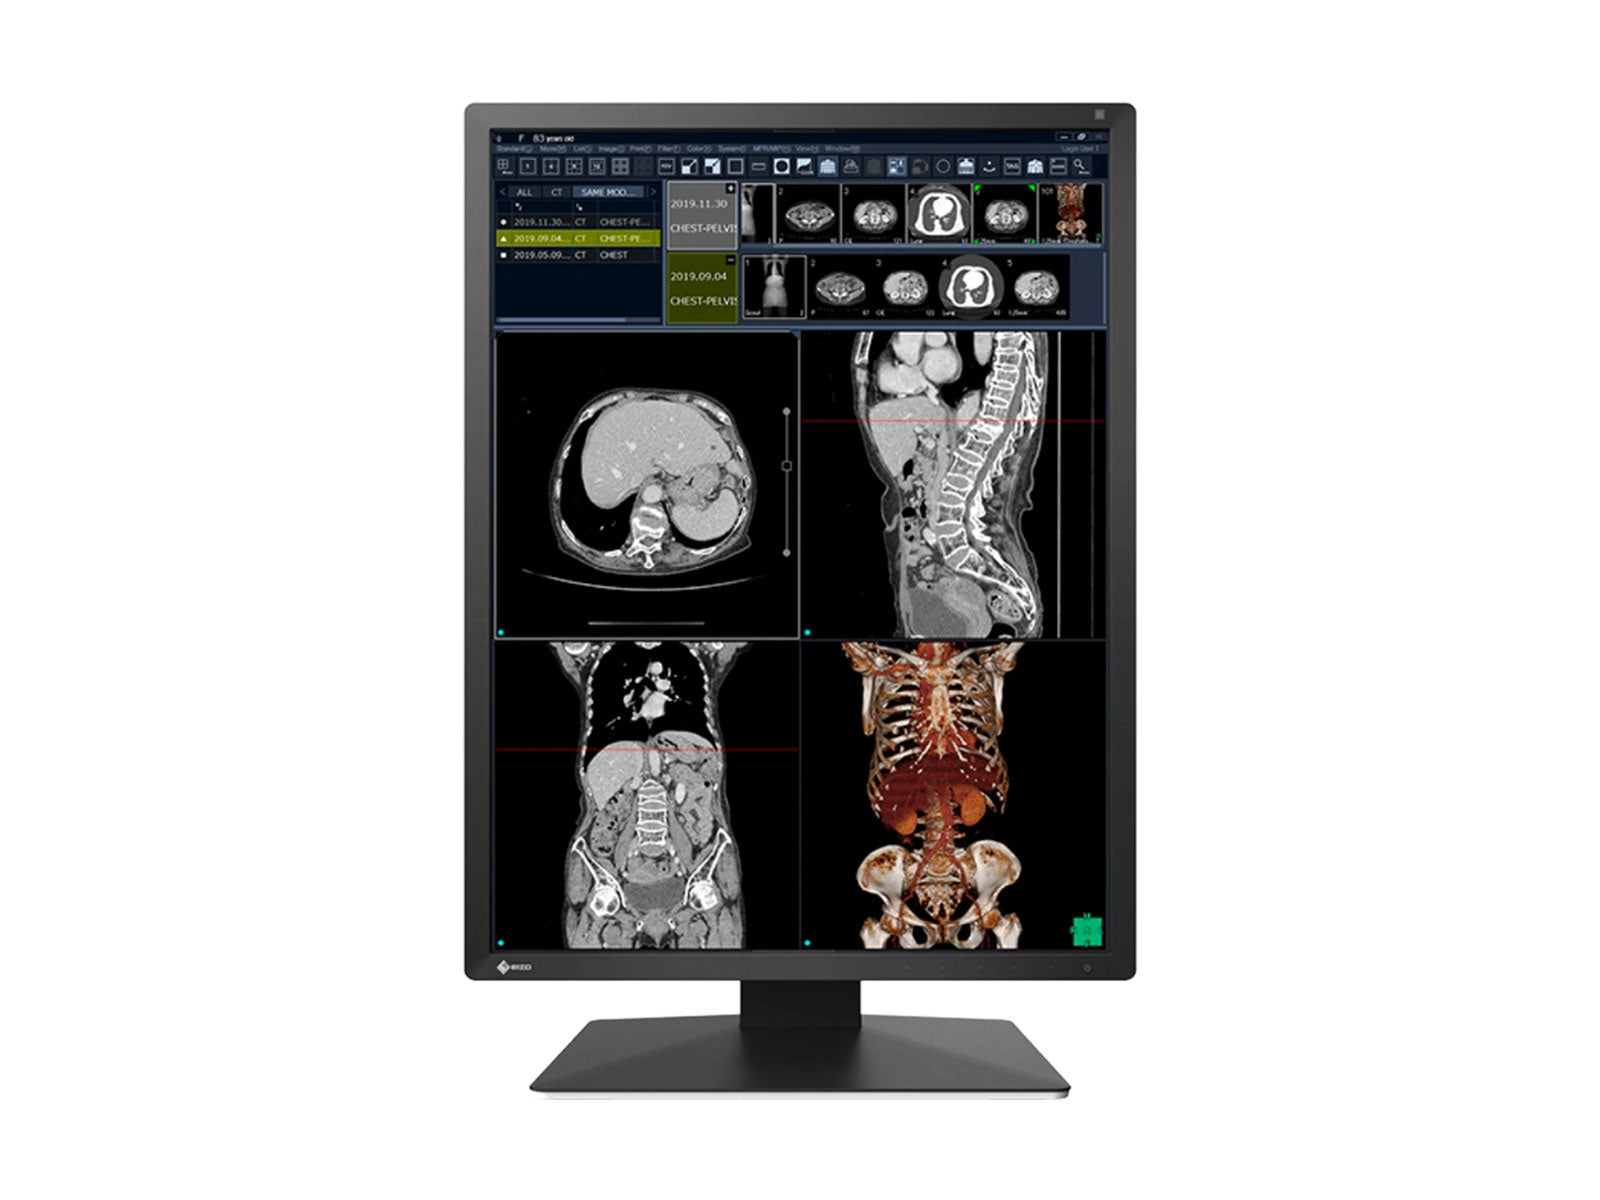 Eizo RadiForce RX270 2MP 21" Color LED Medical Diagnostic Radiology Display Monitor (RX270-BK)